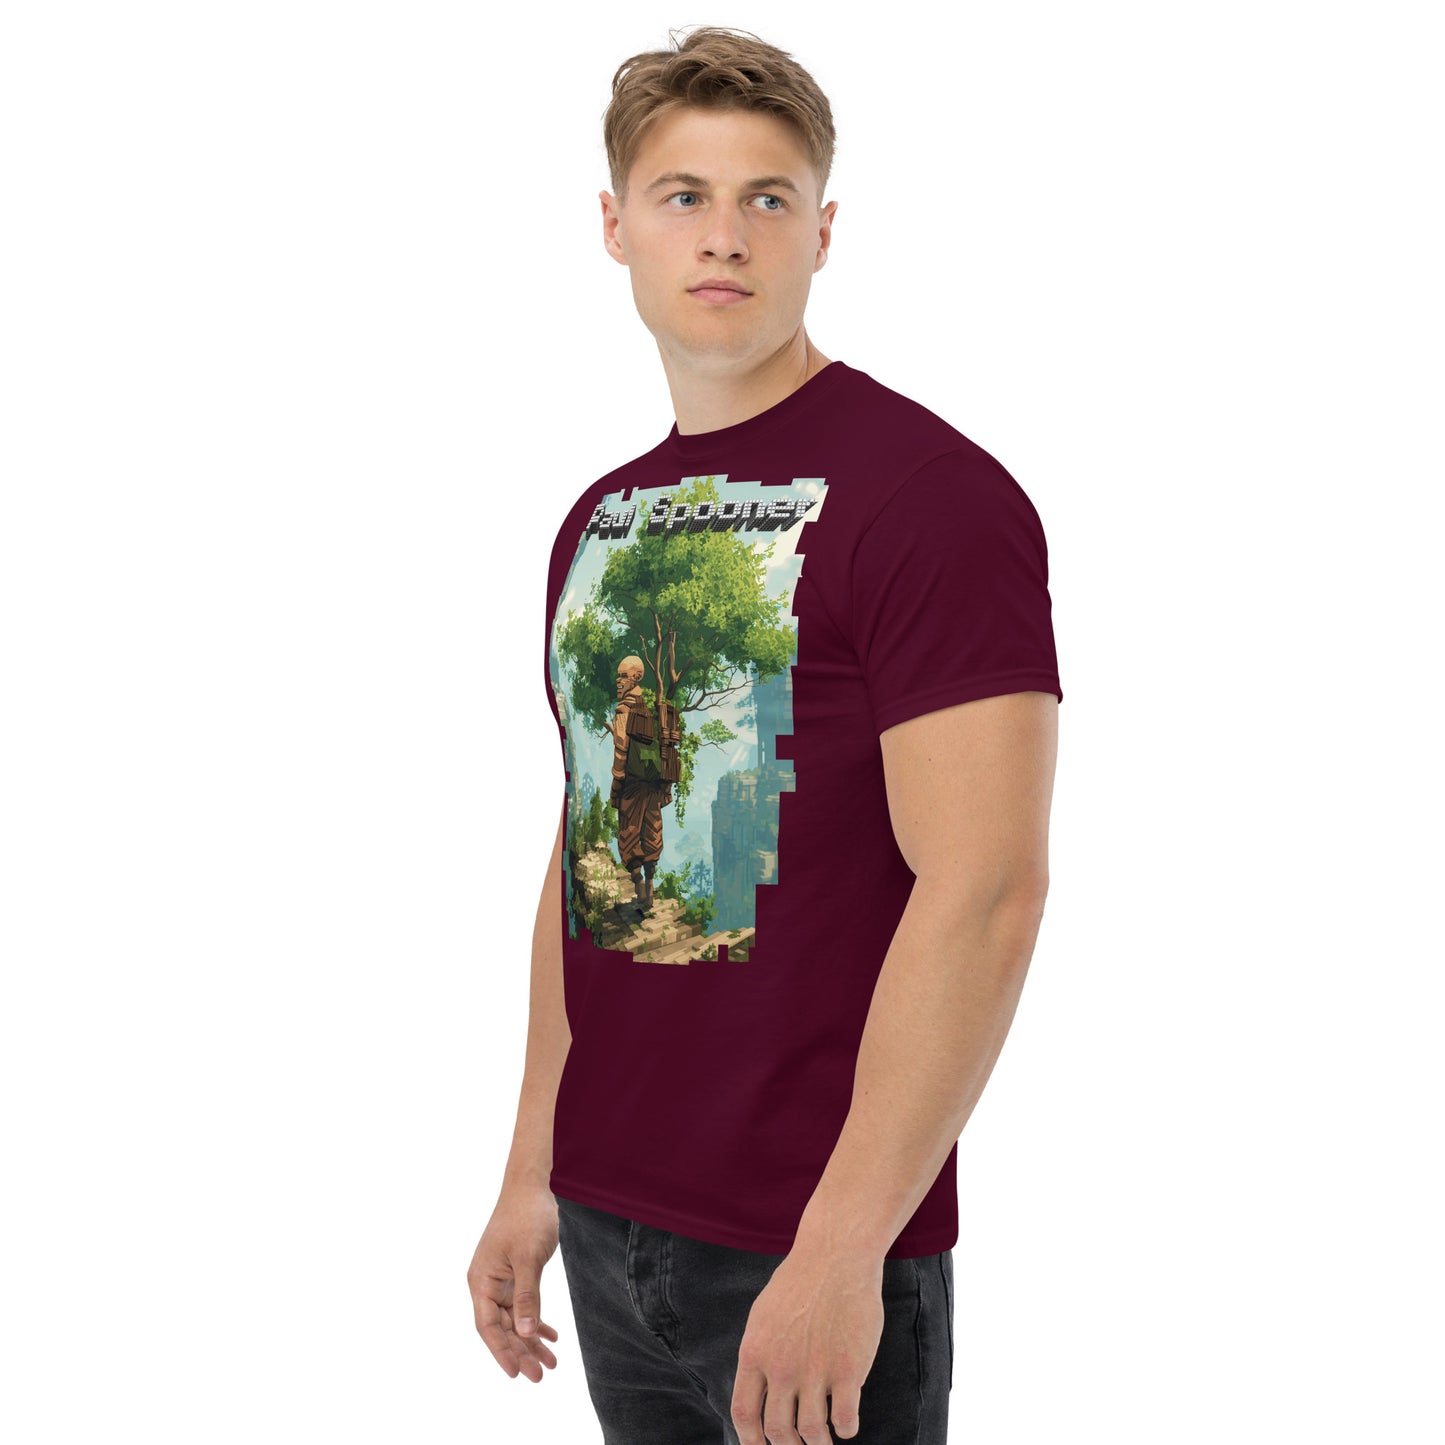 Paul Spooner Voxel Tree Game Designer Tee Shirt, Minecraft Bald Boy Keloğlan